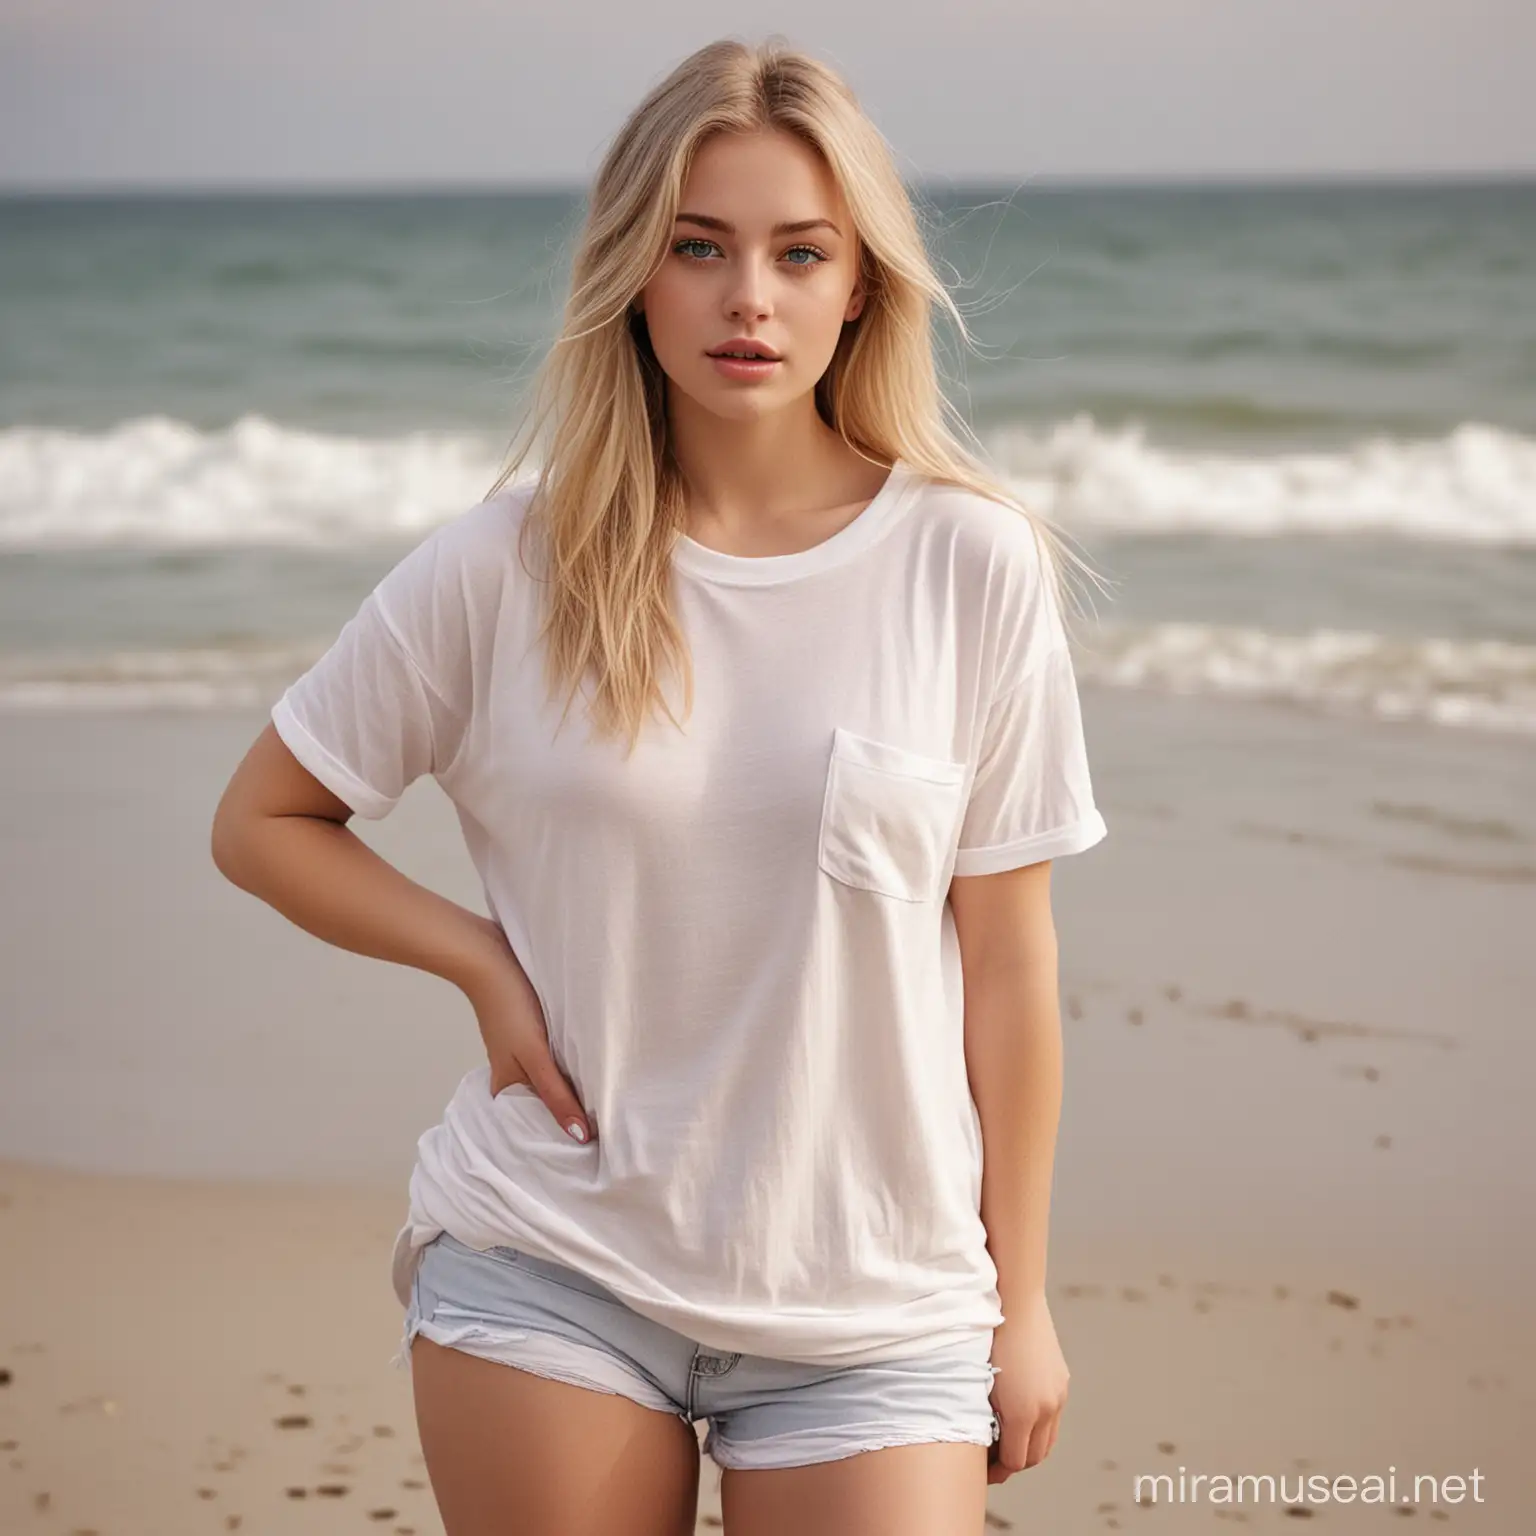 Youthful Nordic Beach Beauty in Oversized Comfort TShirt